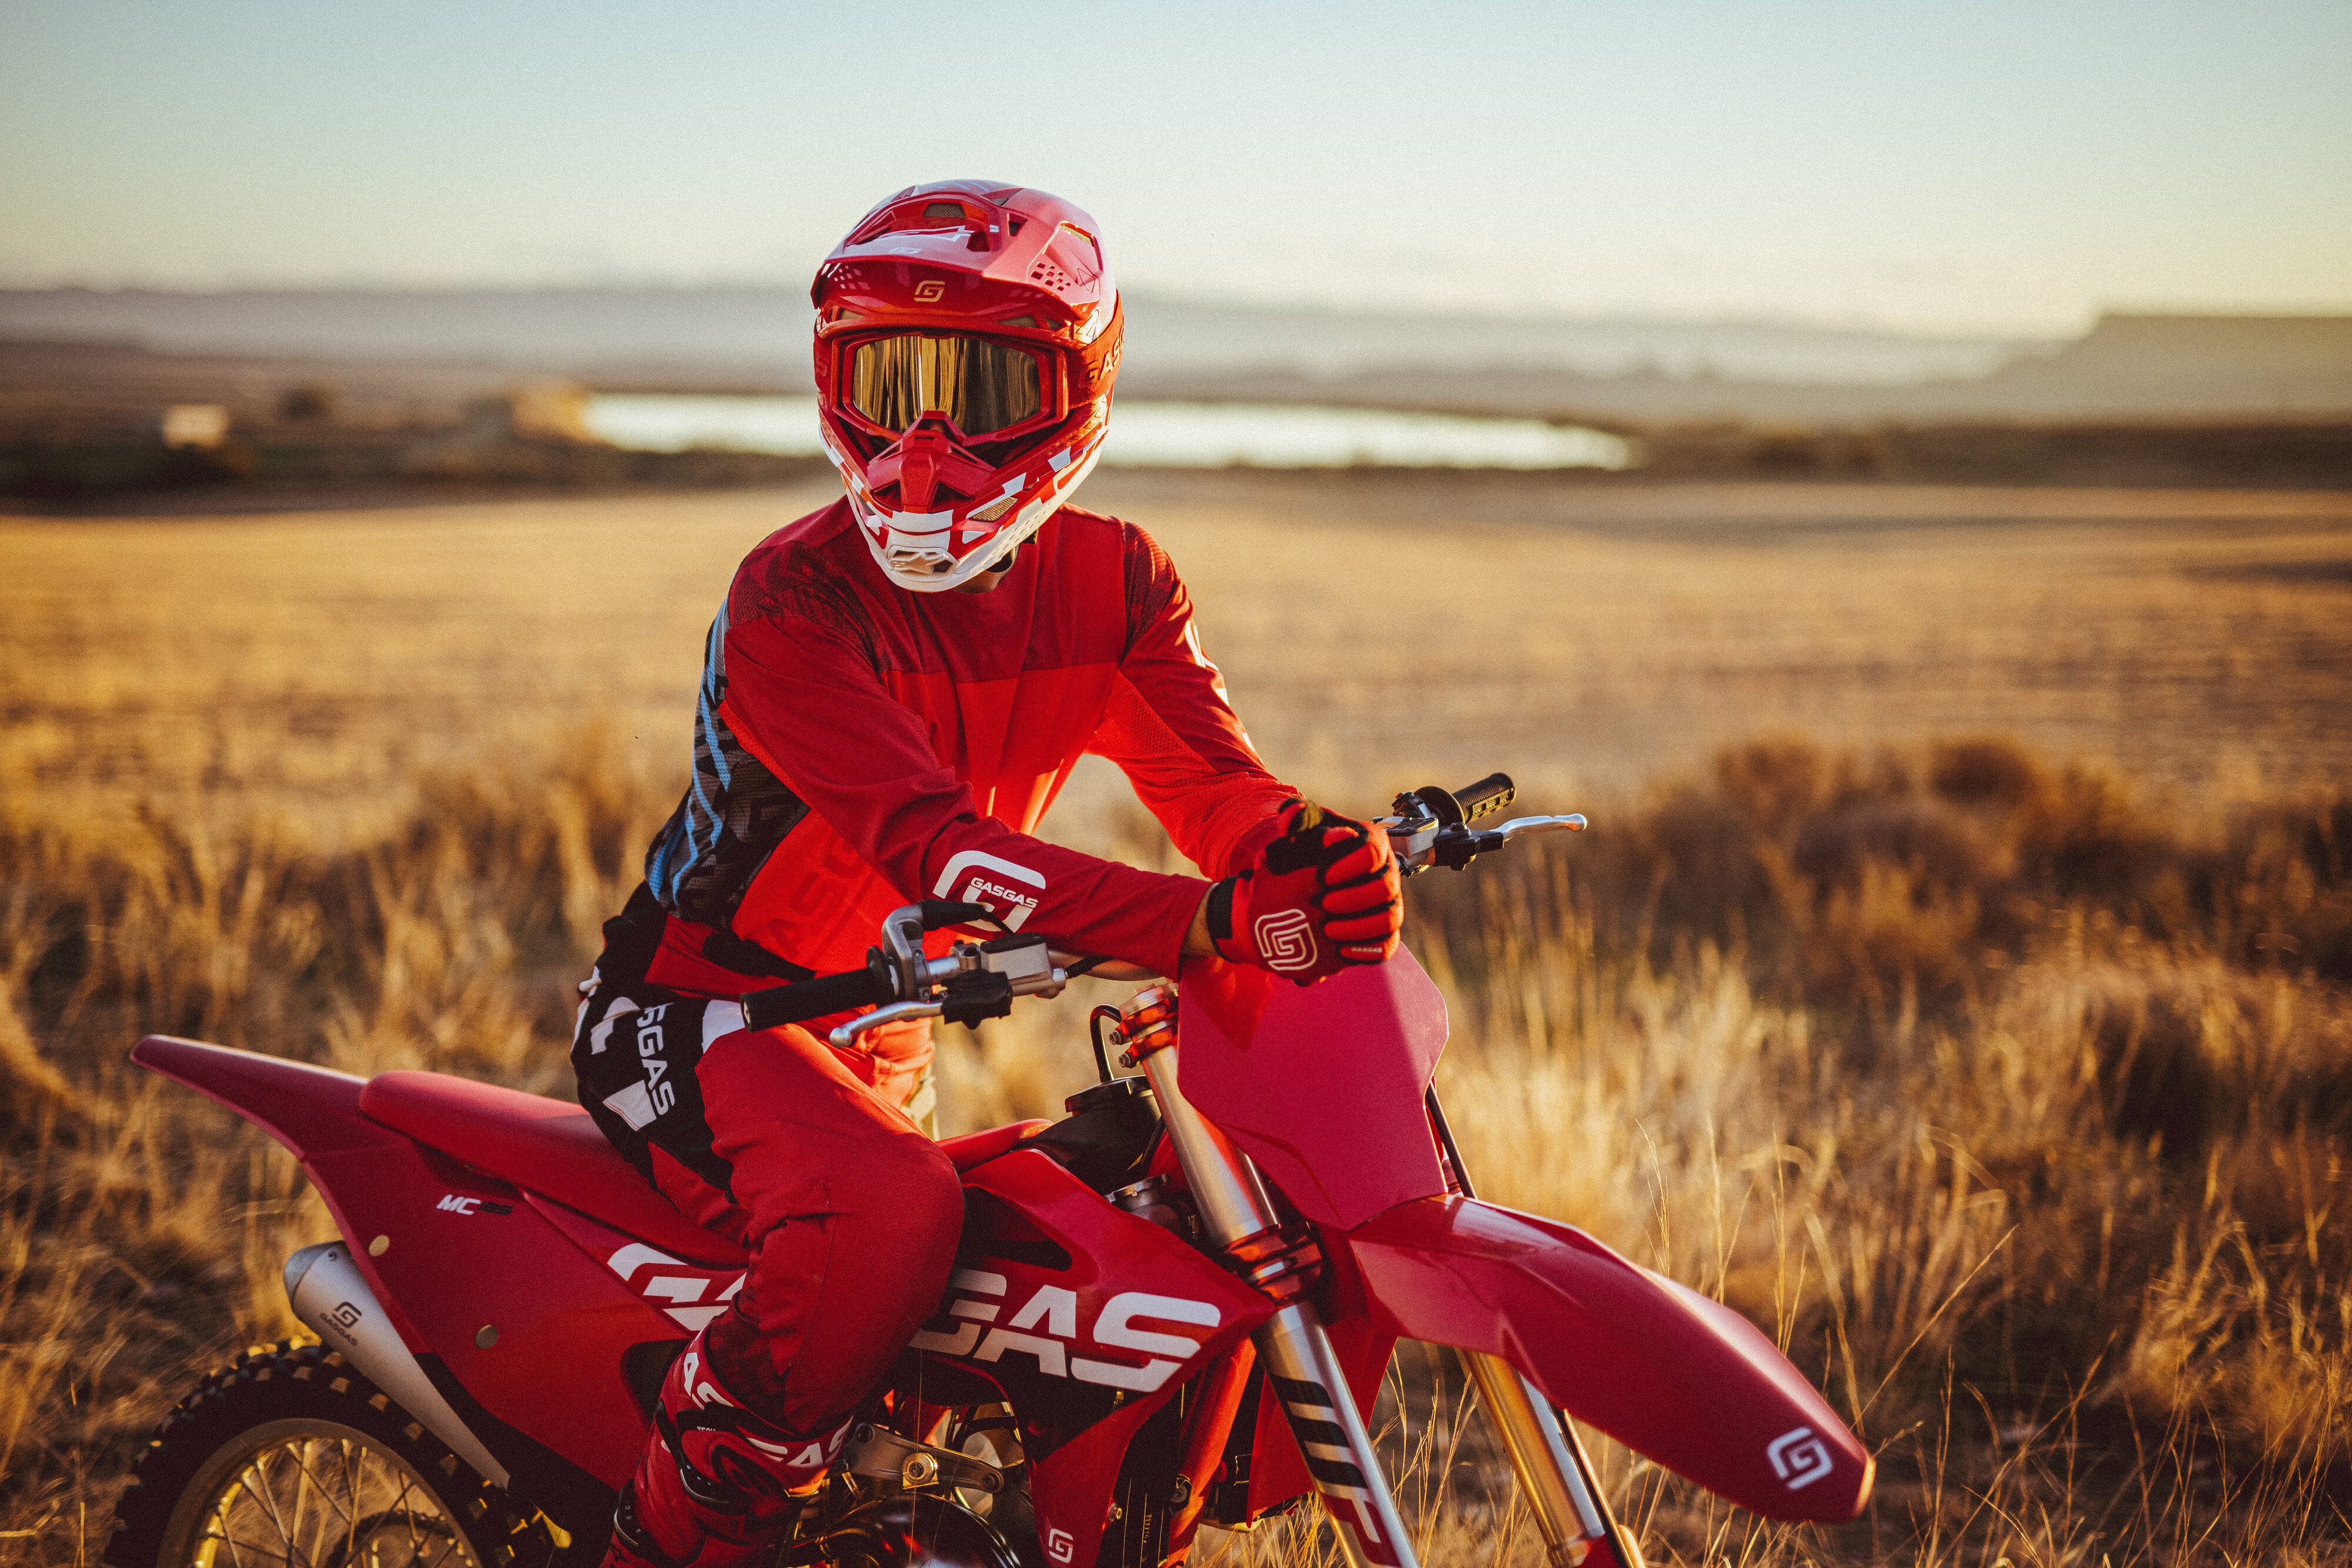 Motocross & Dirt Bike Helmets  Dirt bike riding gear, Dirt bike gear, Cool  dirt bikes